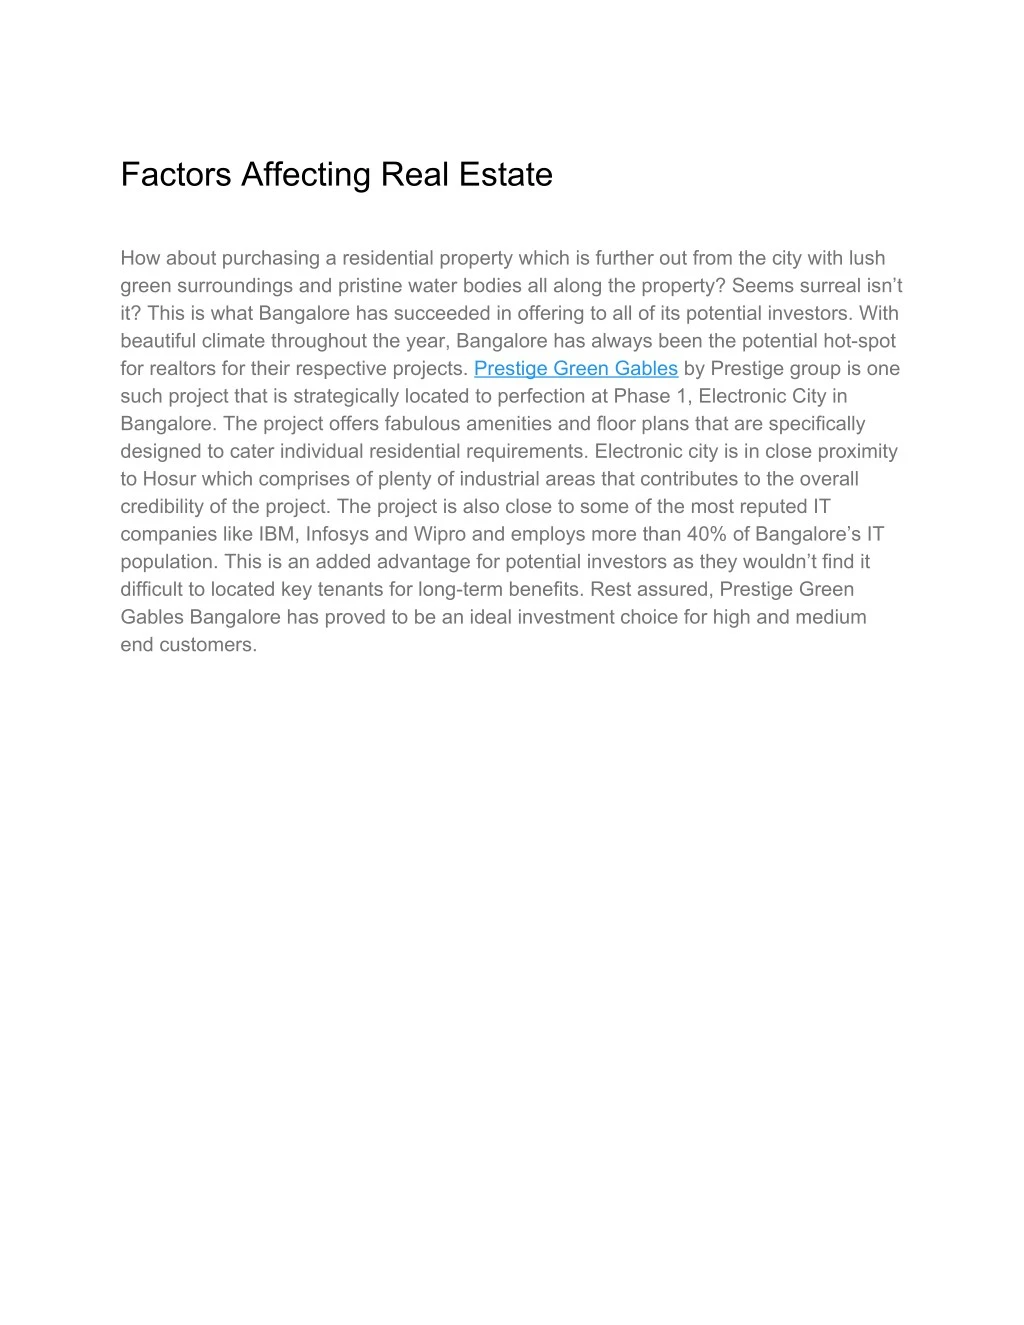 factors affecting real estate